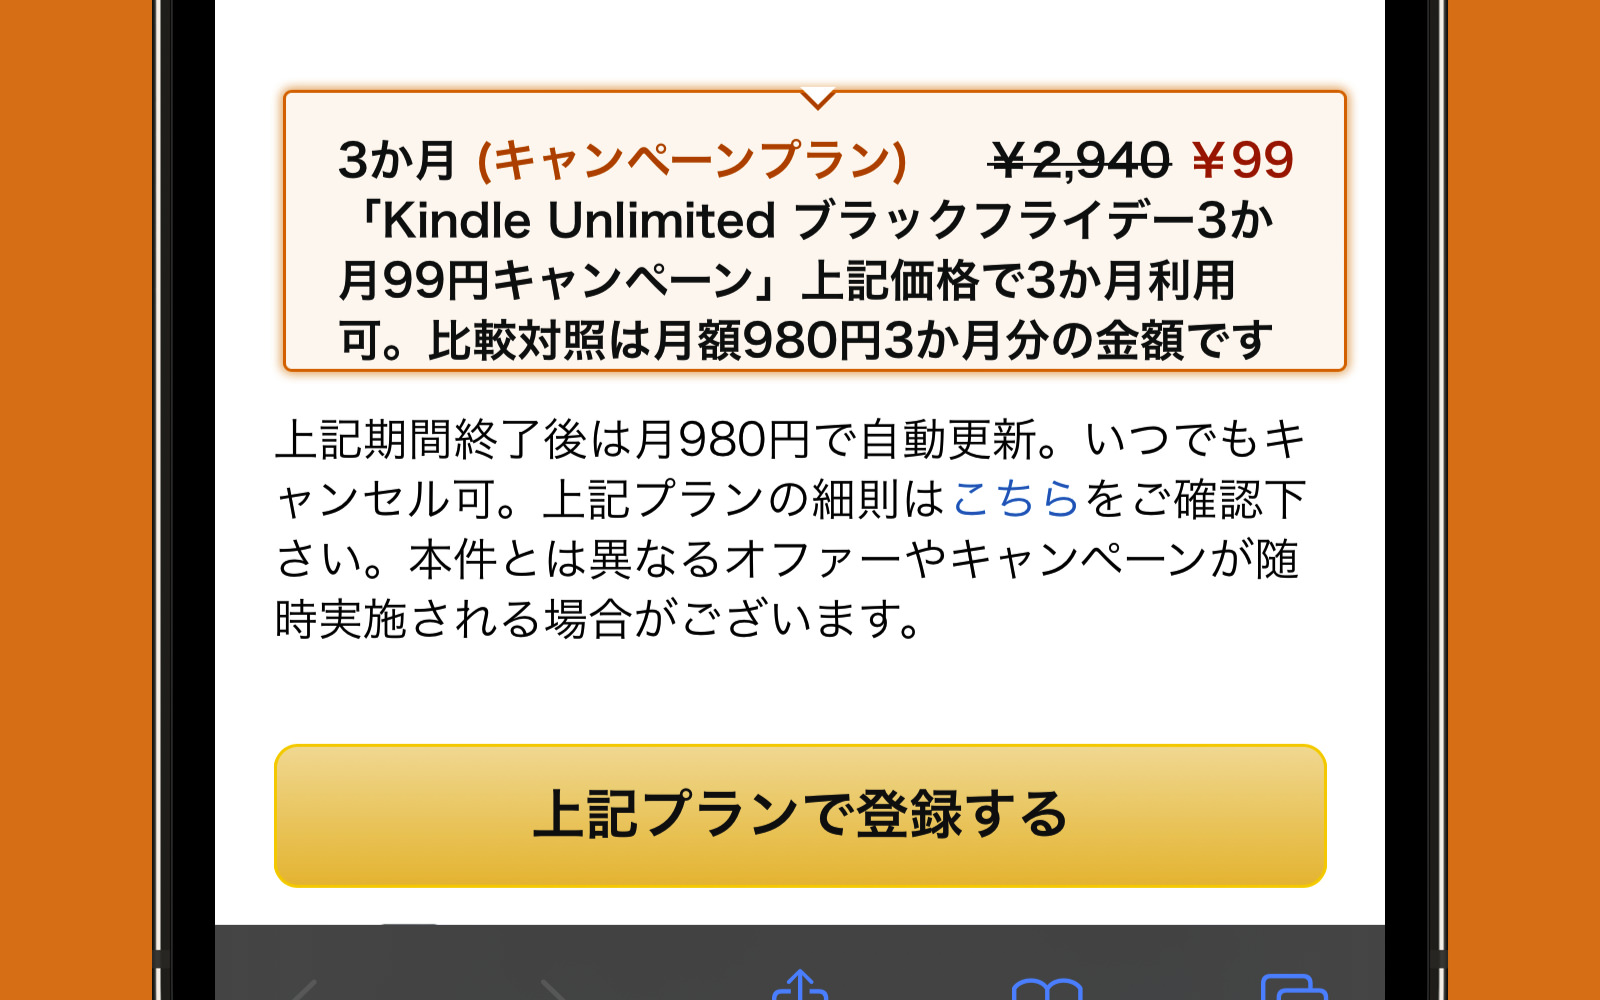 Kindle Unlimited Black Friday Plan